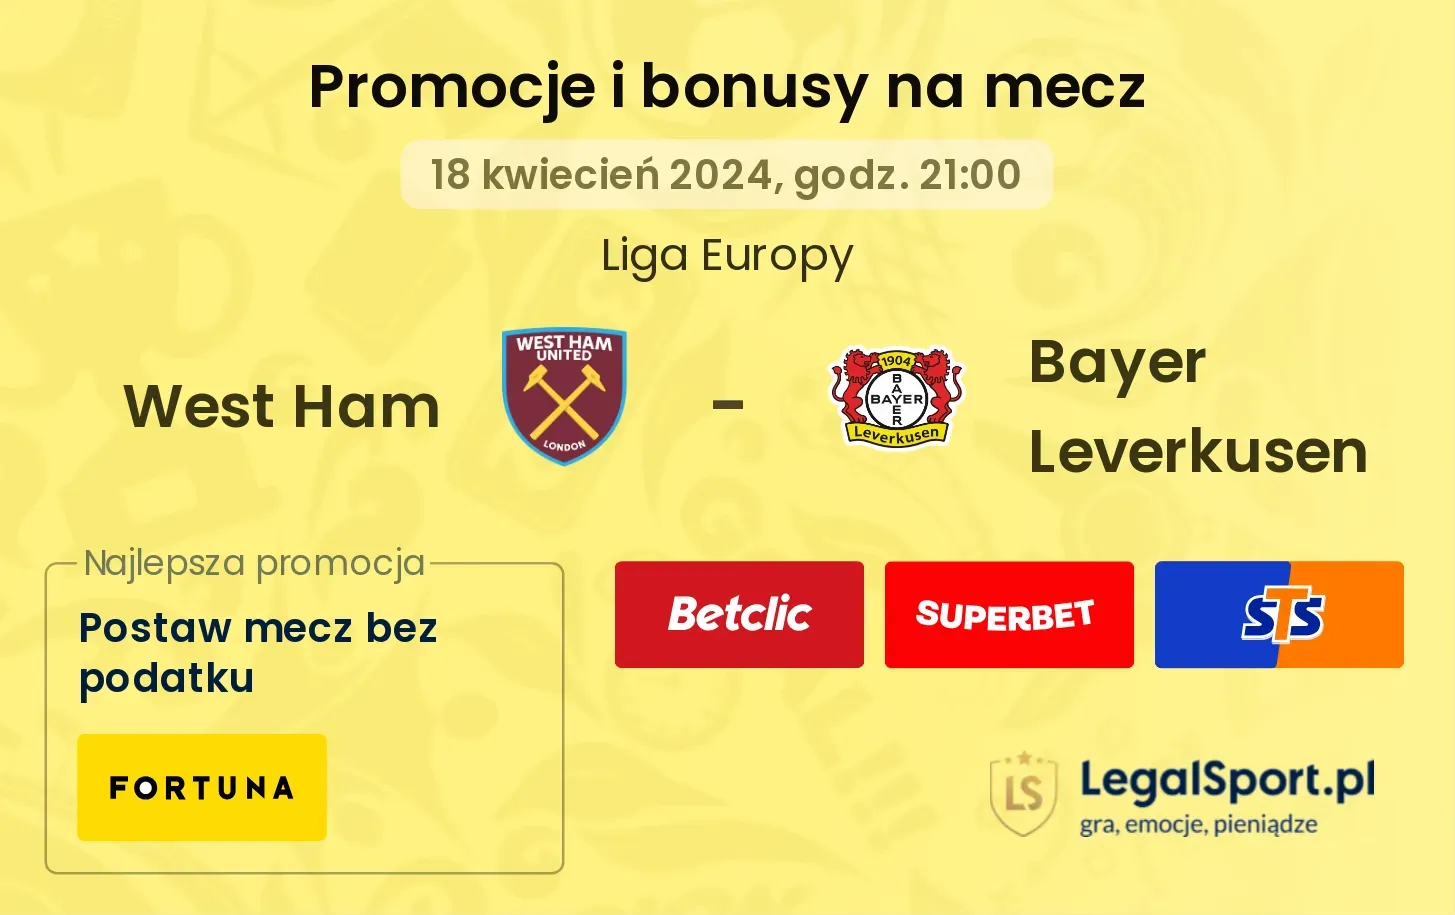 West Ham - Bayer Leverkusen promocje i bonusy (18.04, 21:00)